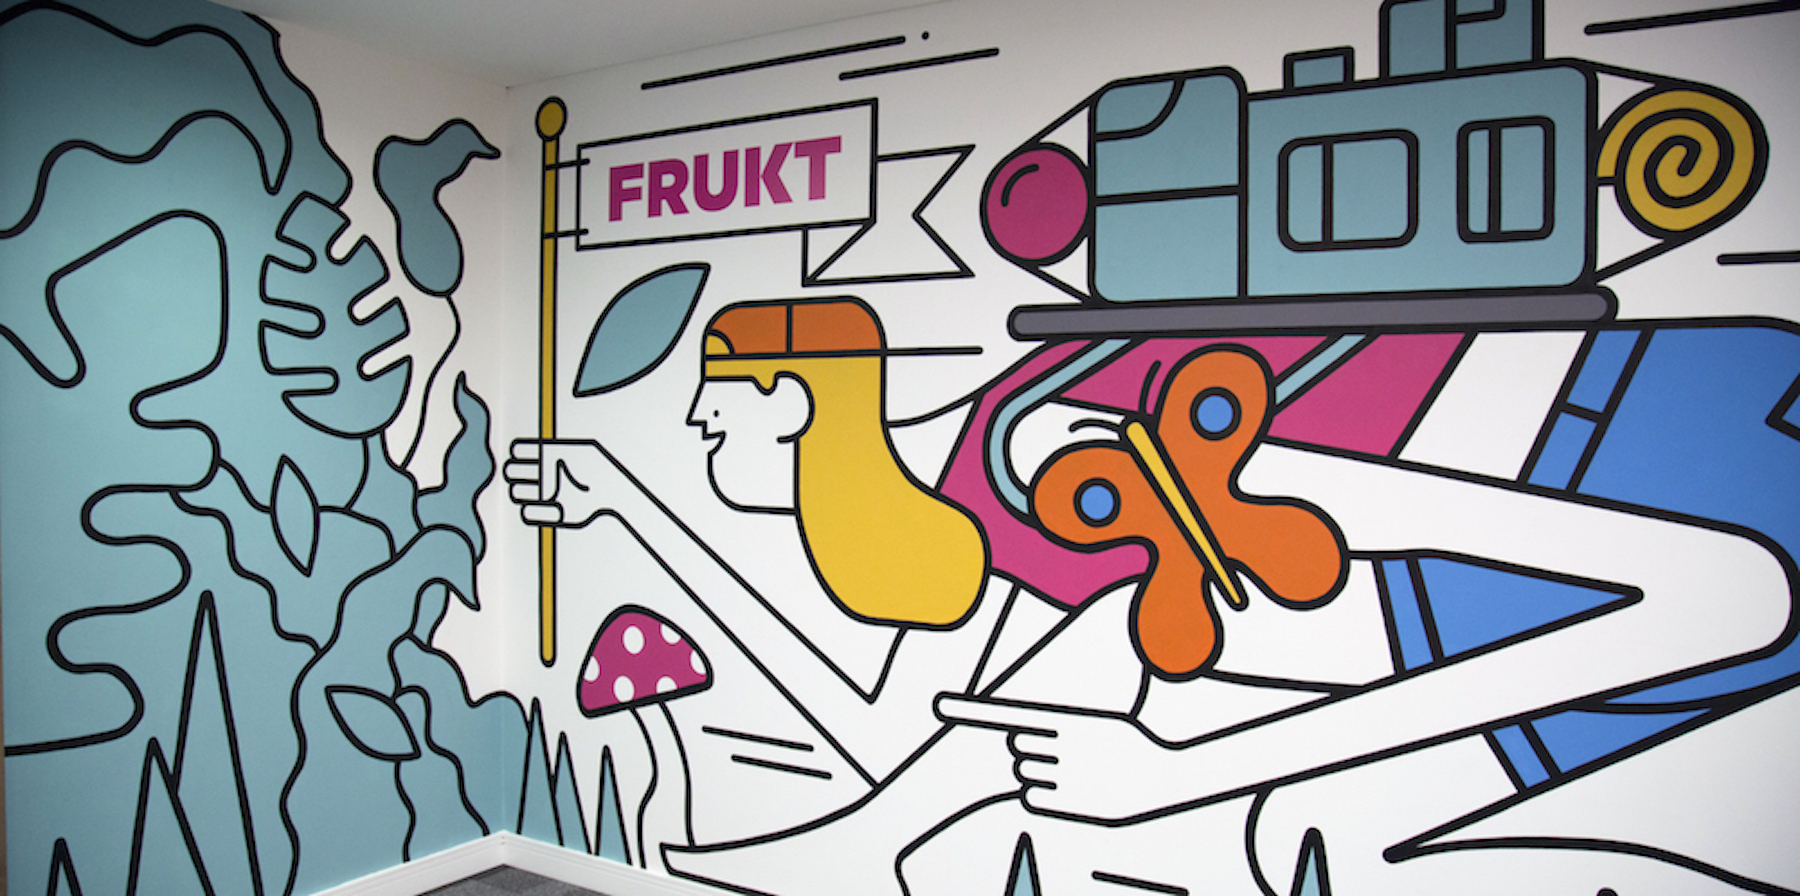 Office mural by Sam Peet